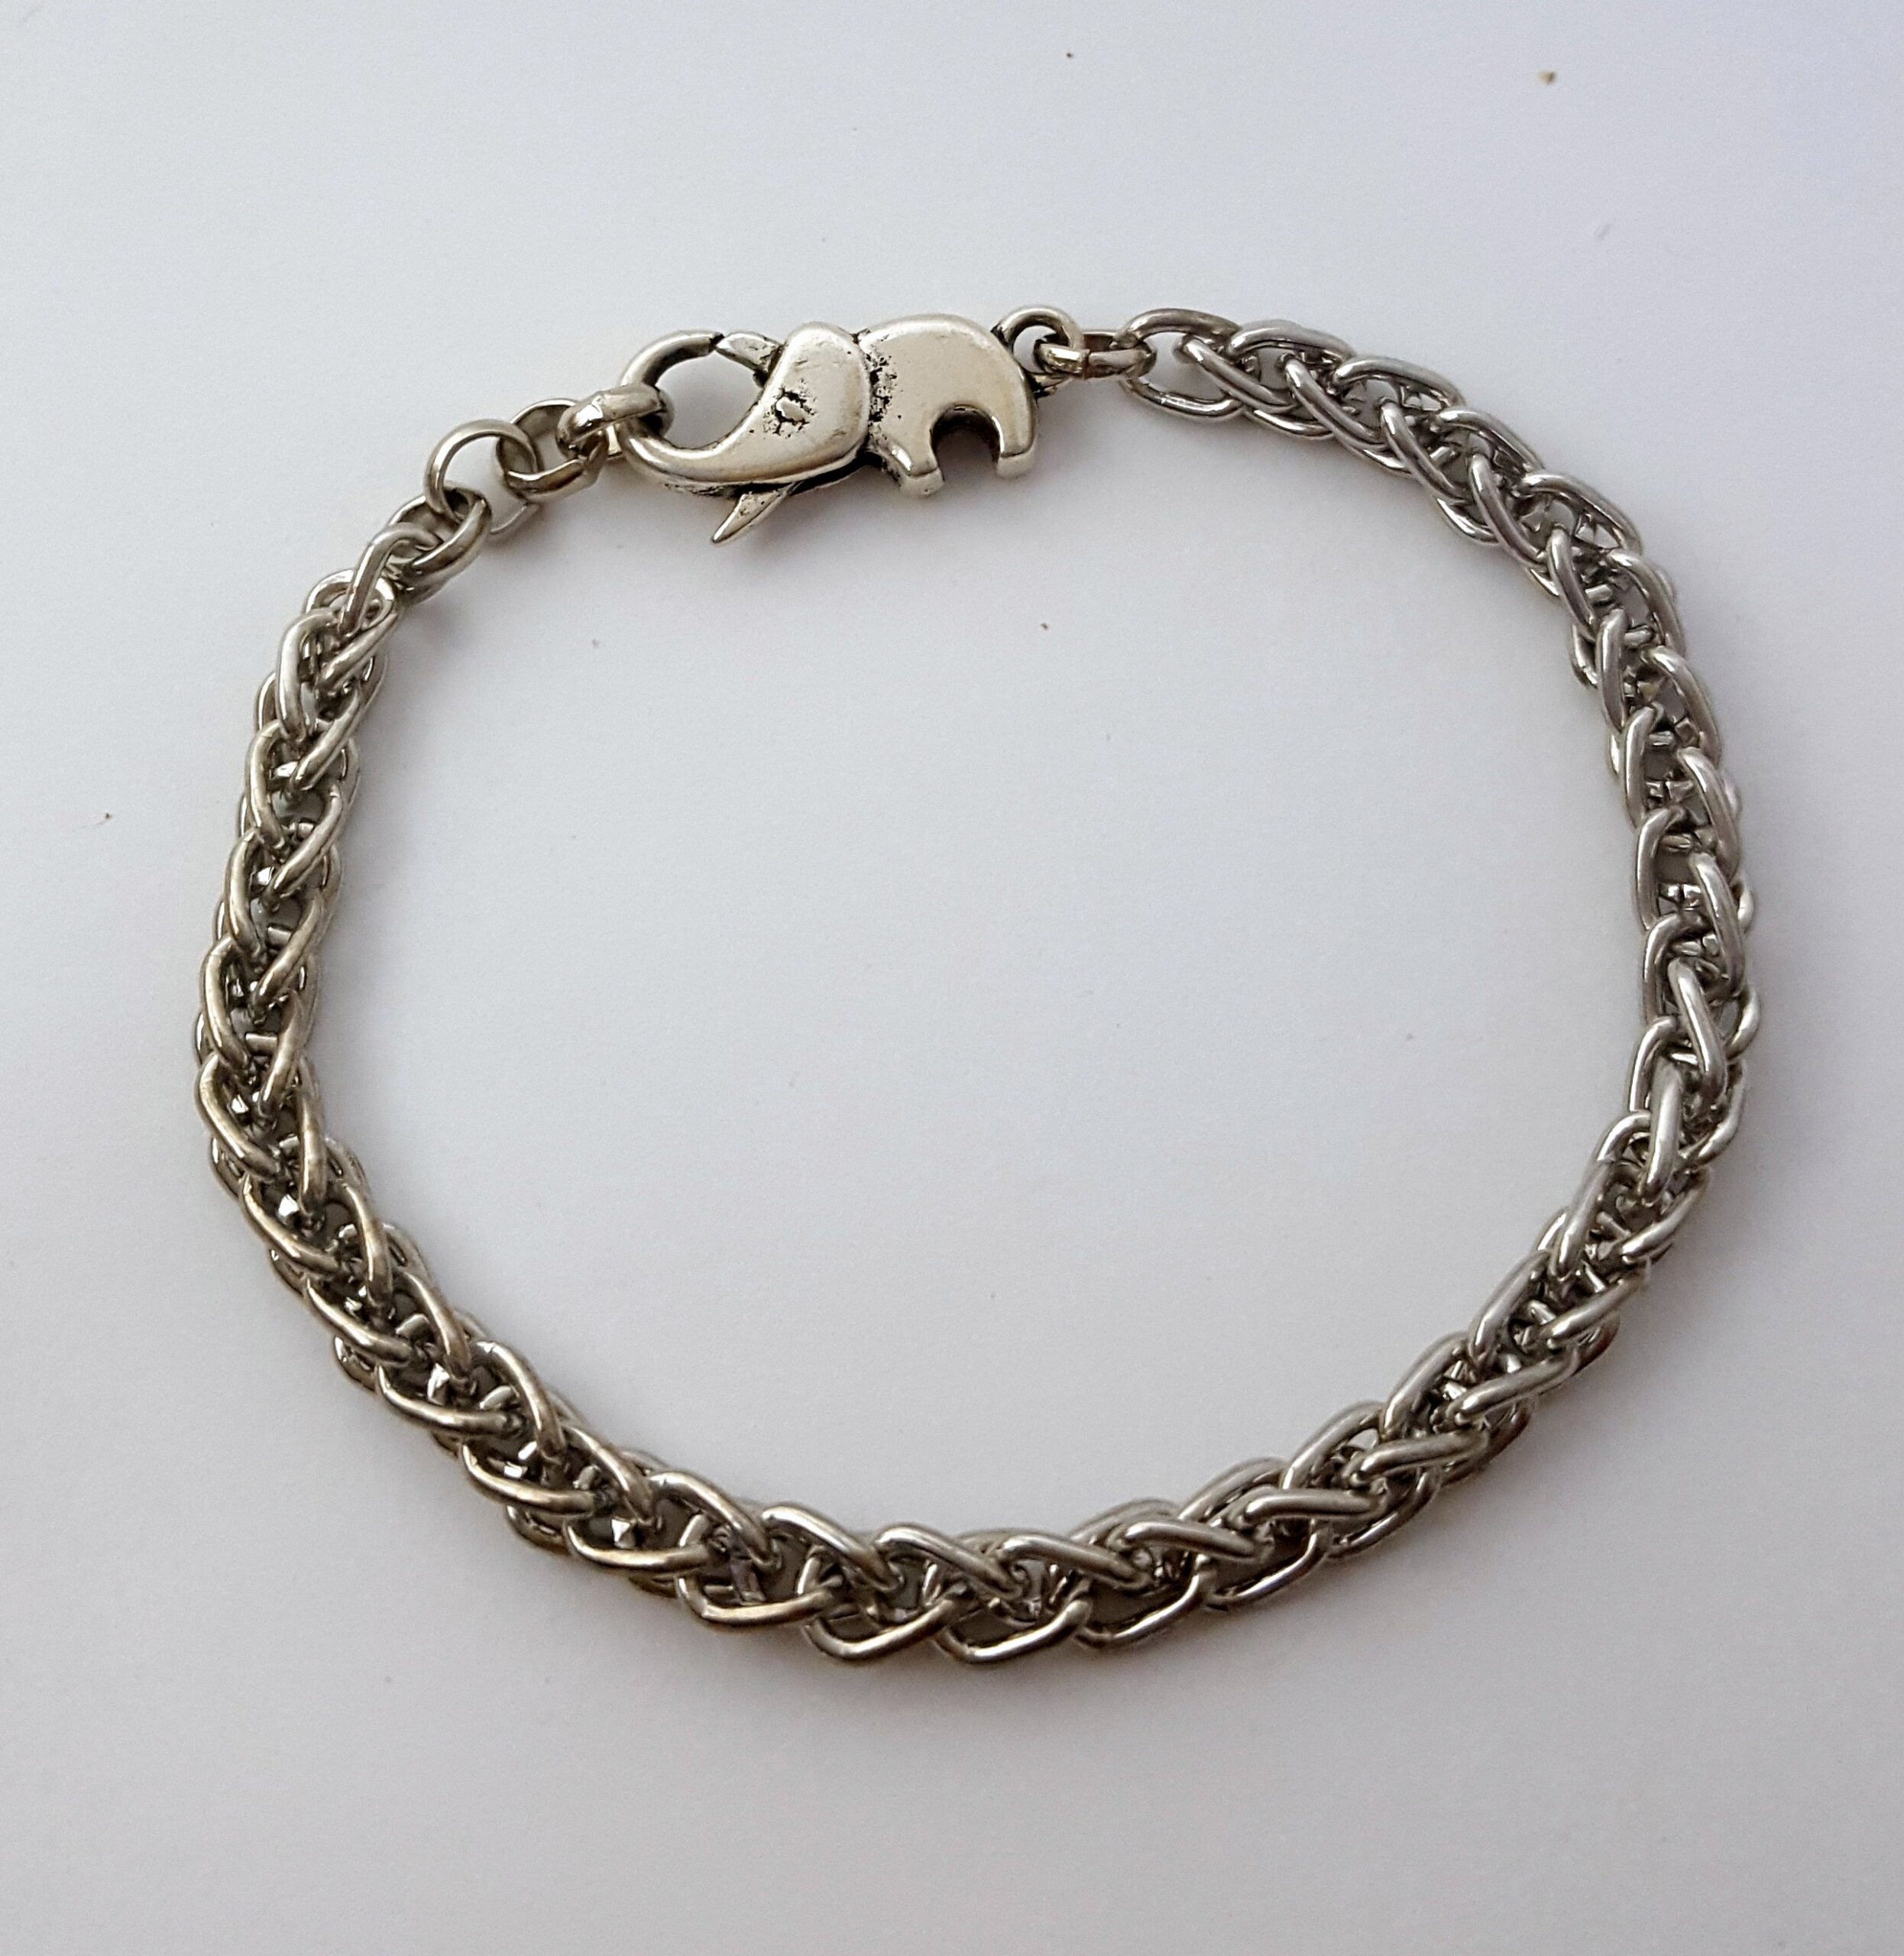 Bracelet BR031 - Woven Silver Chain, Plain, With Antique Silver ...